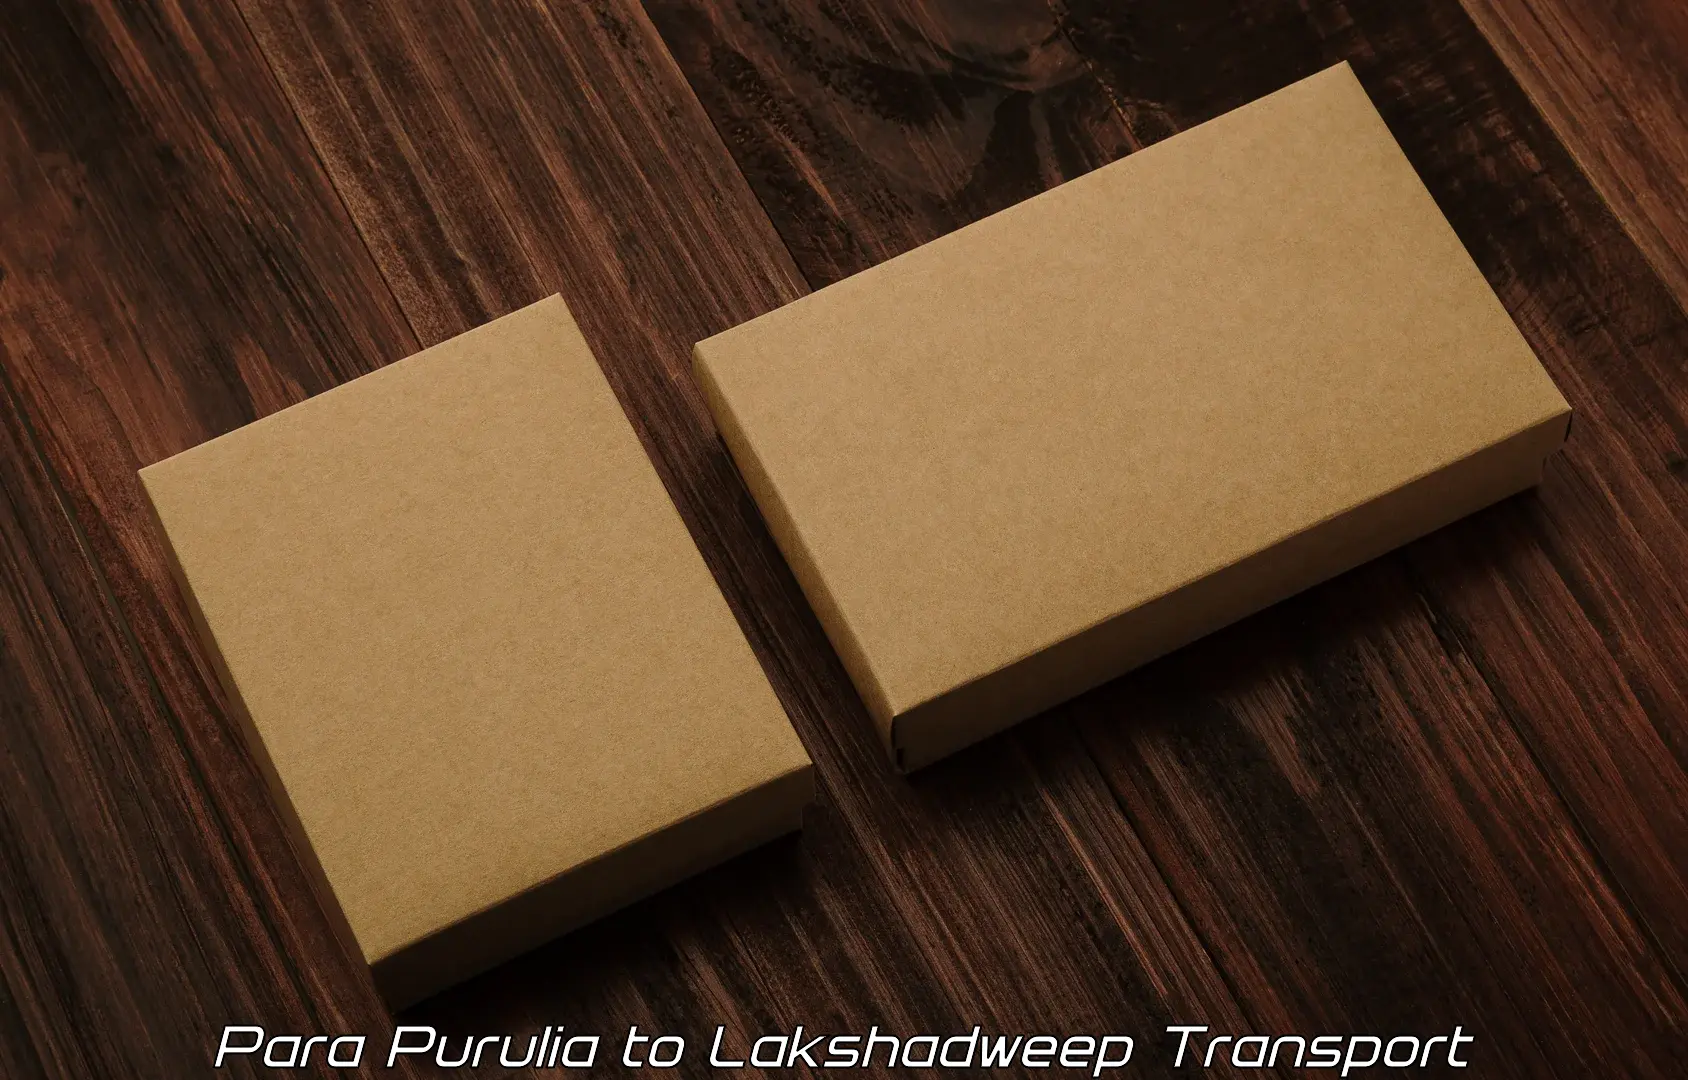 Two wheeler parcel service Para Purulia to Lakshadweep